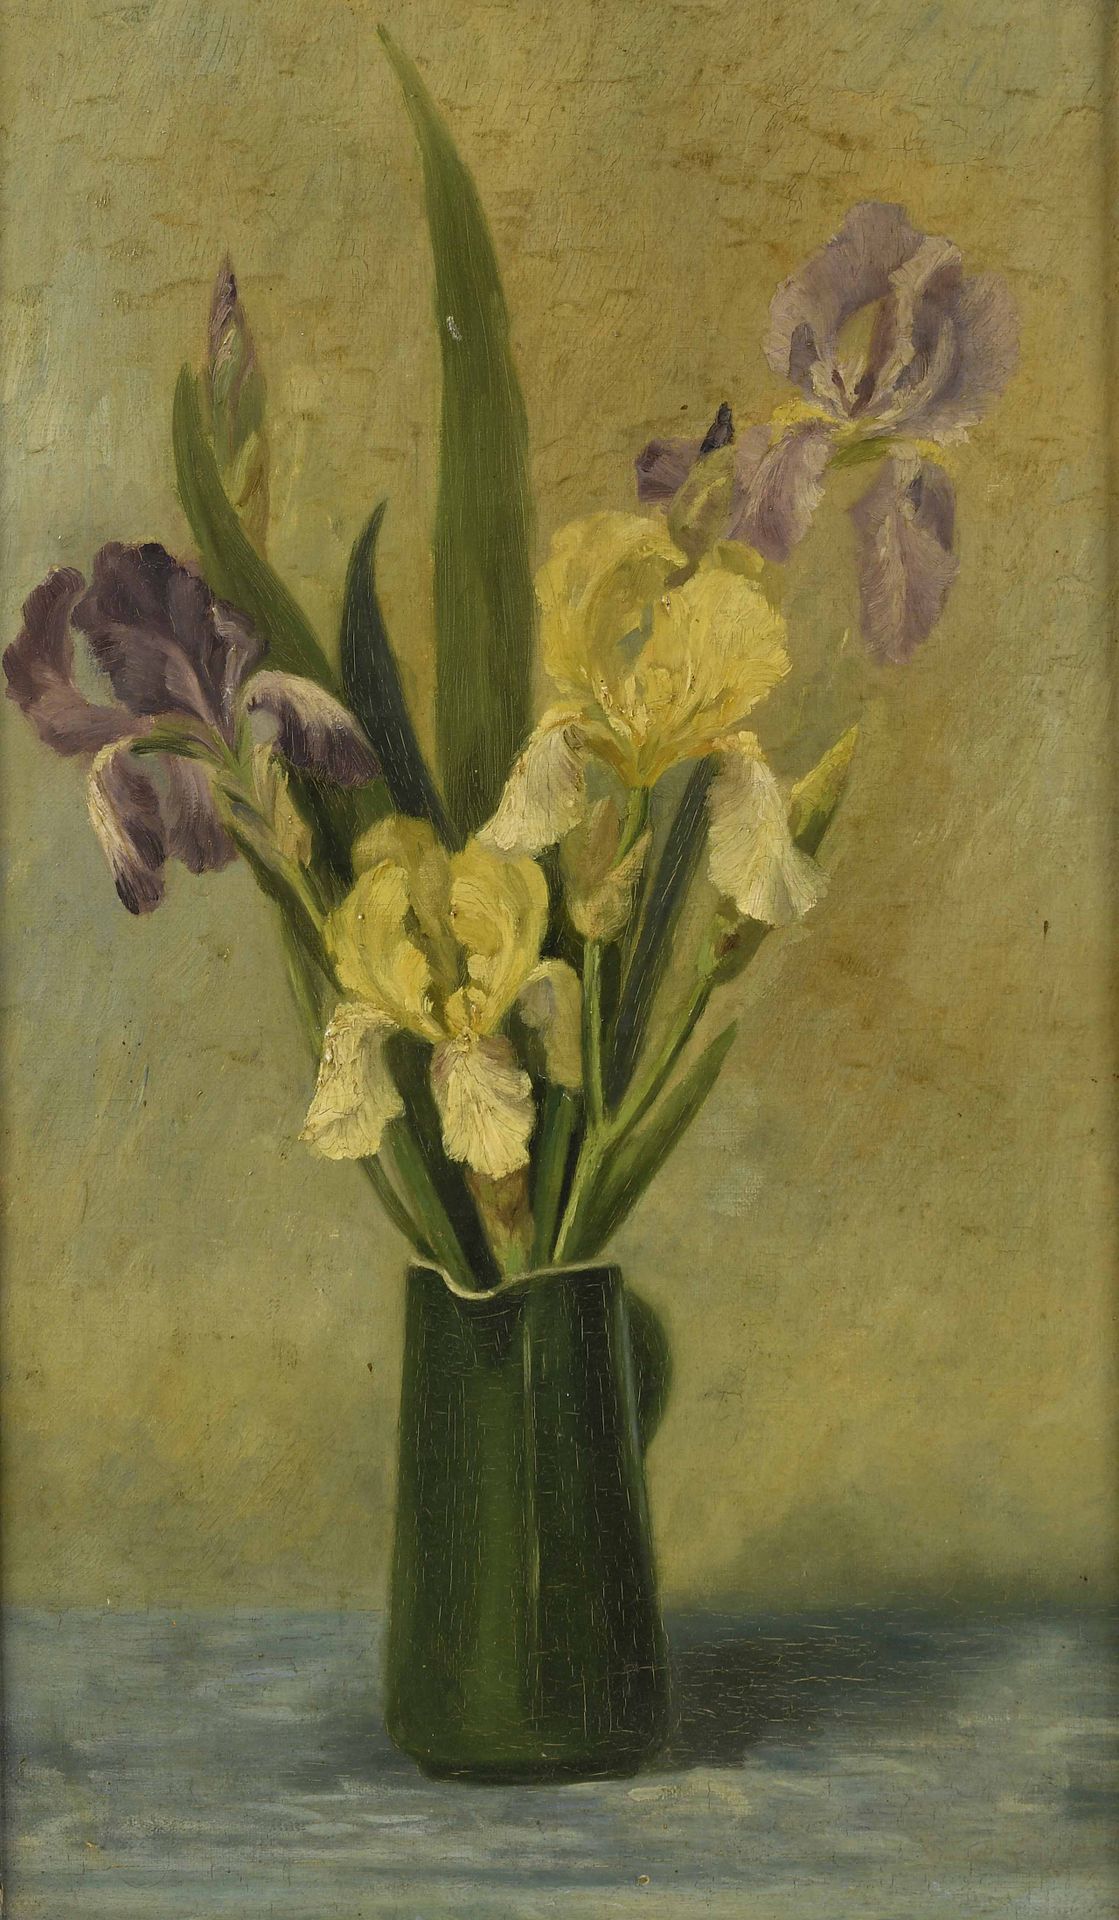 Null Iris gialli e viola
Olio su tela.
55 x 33 cm